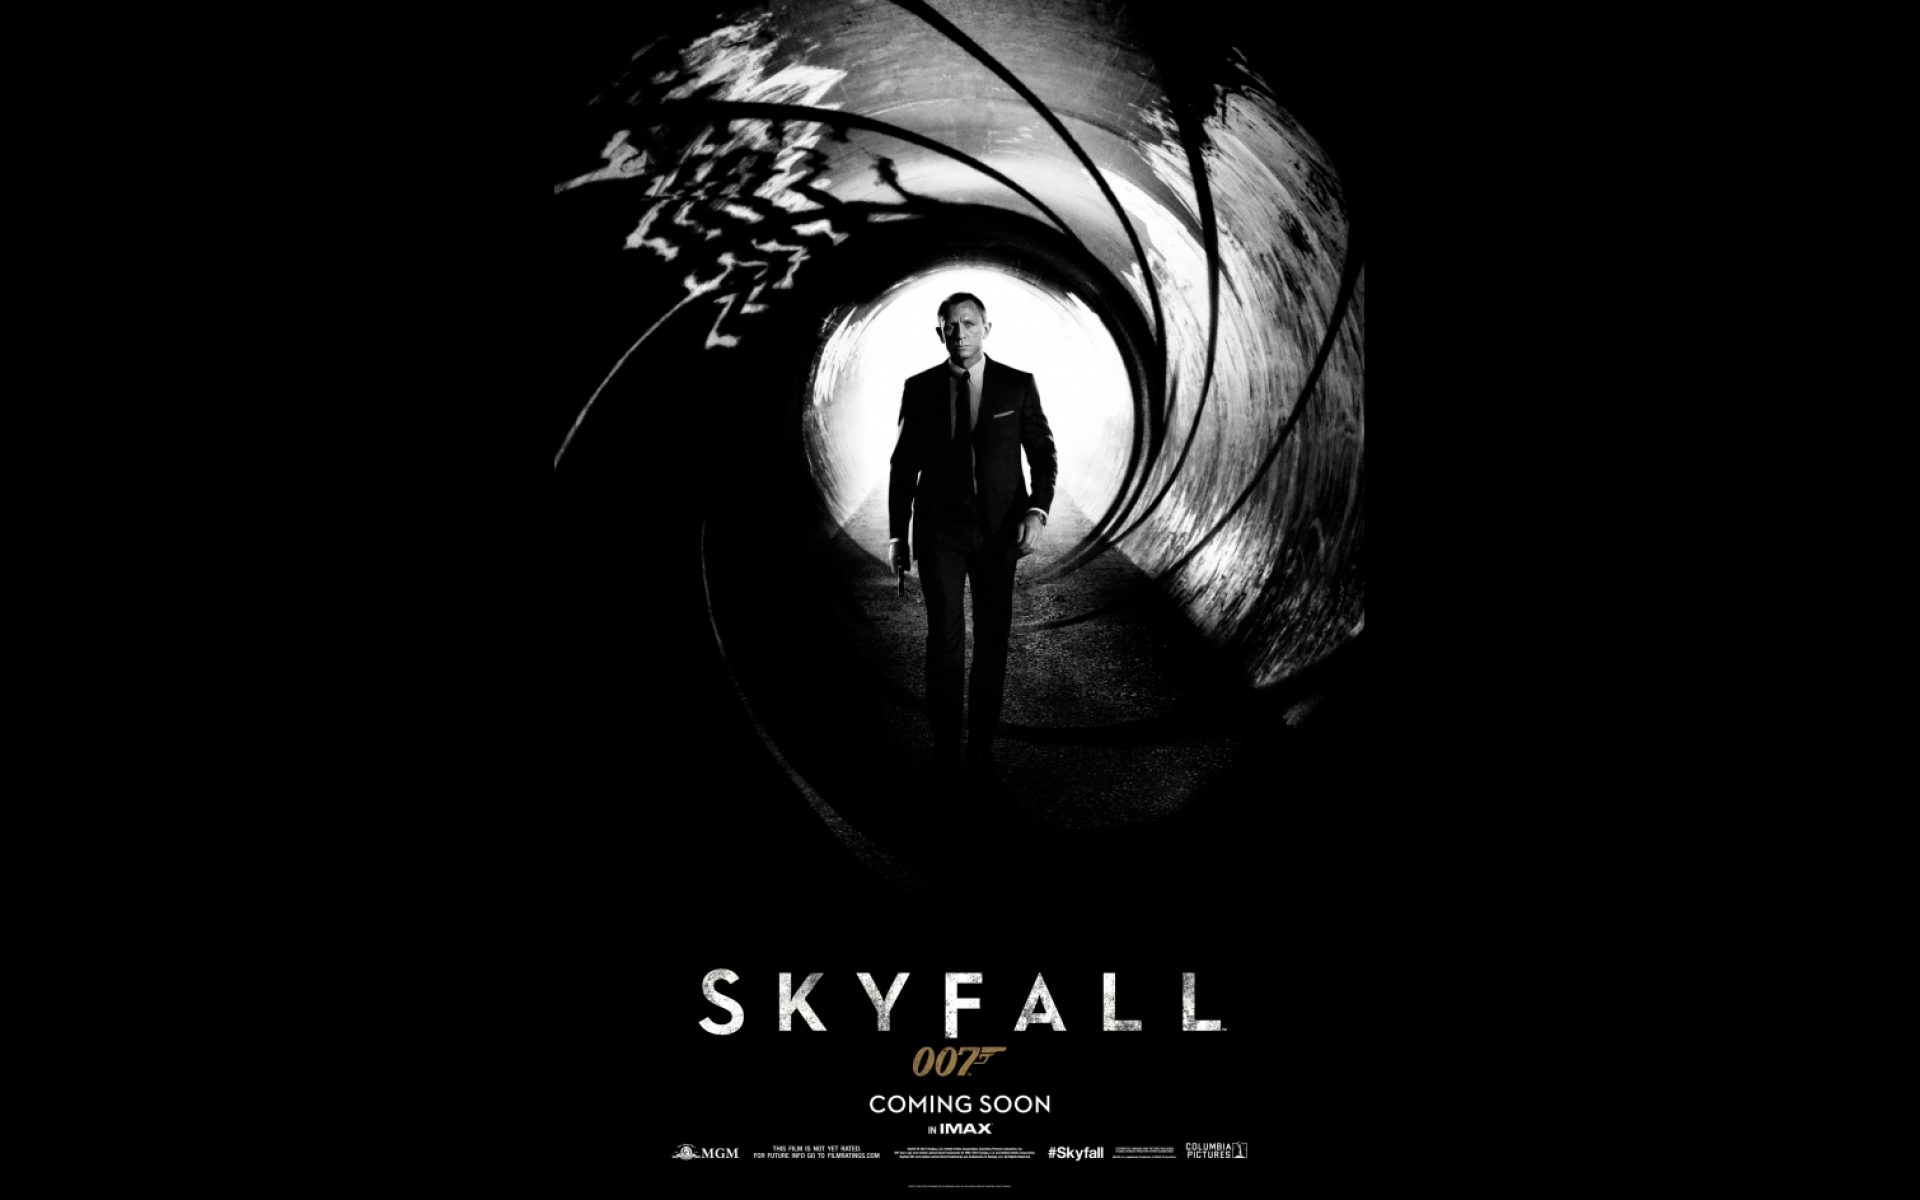 Movies James Bond Posters Skyfall Wallpaper High Quality